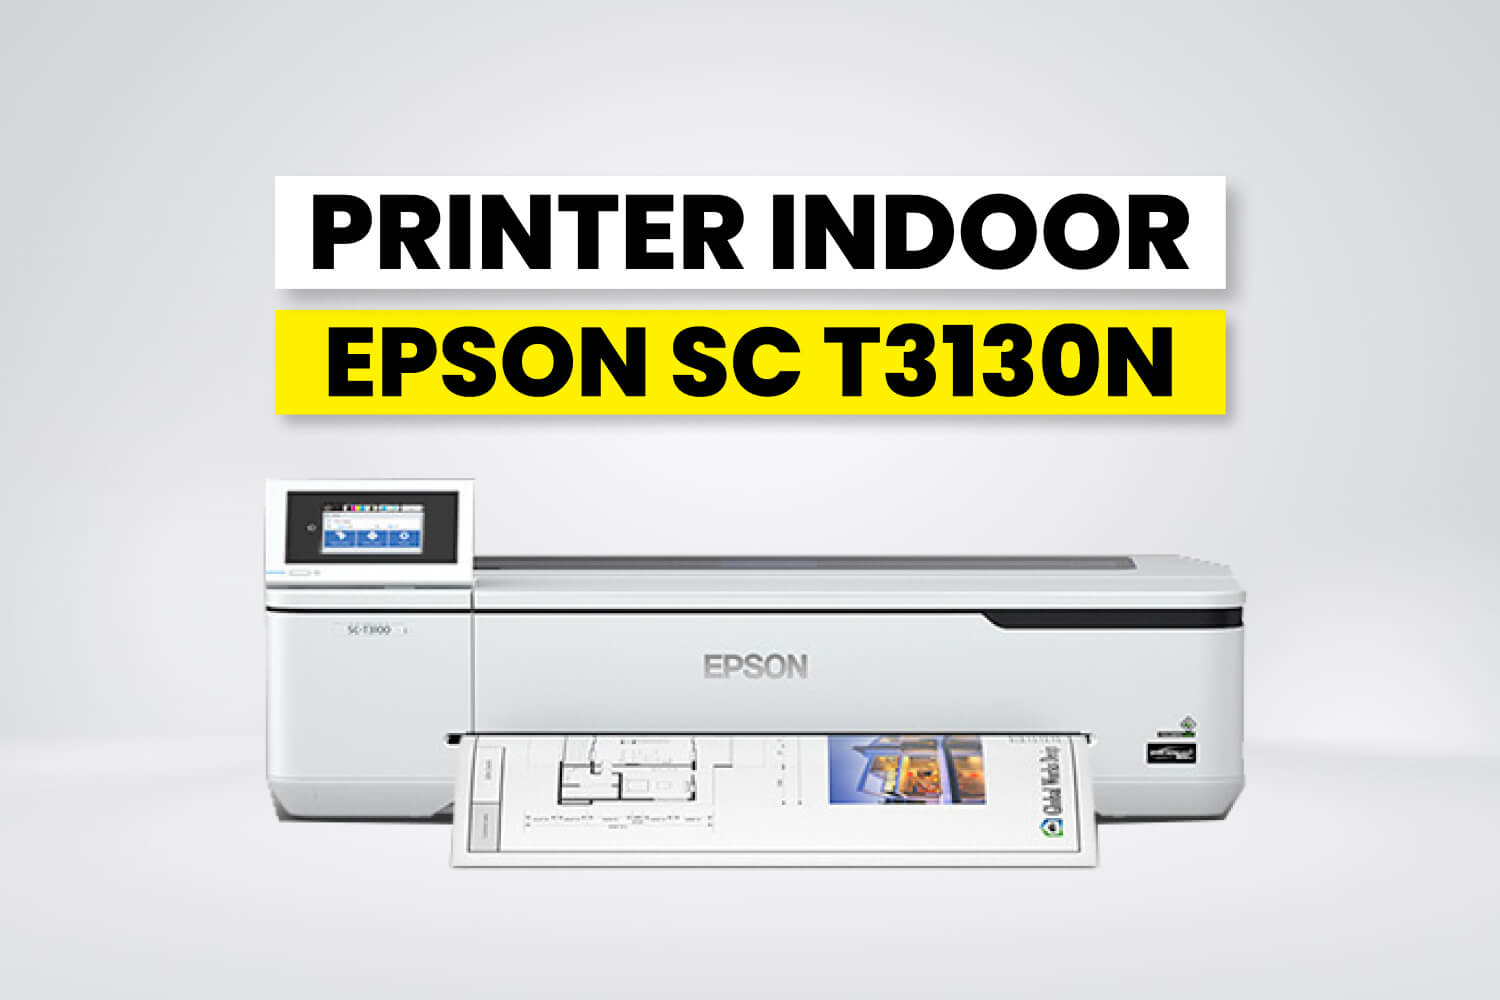 Printer Indoor Epson Surecolor Sc-T3130N